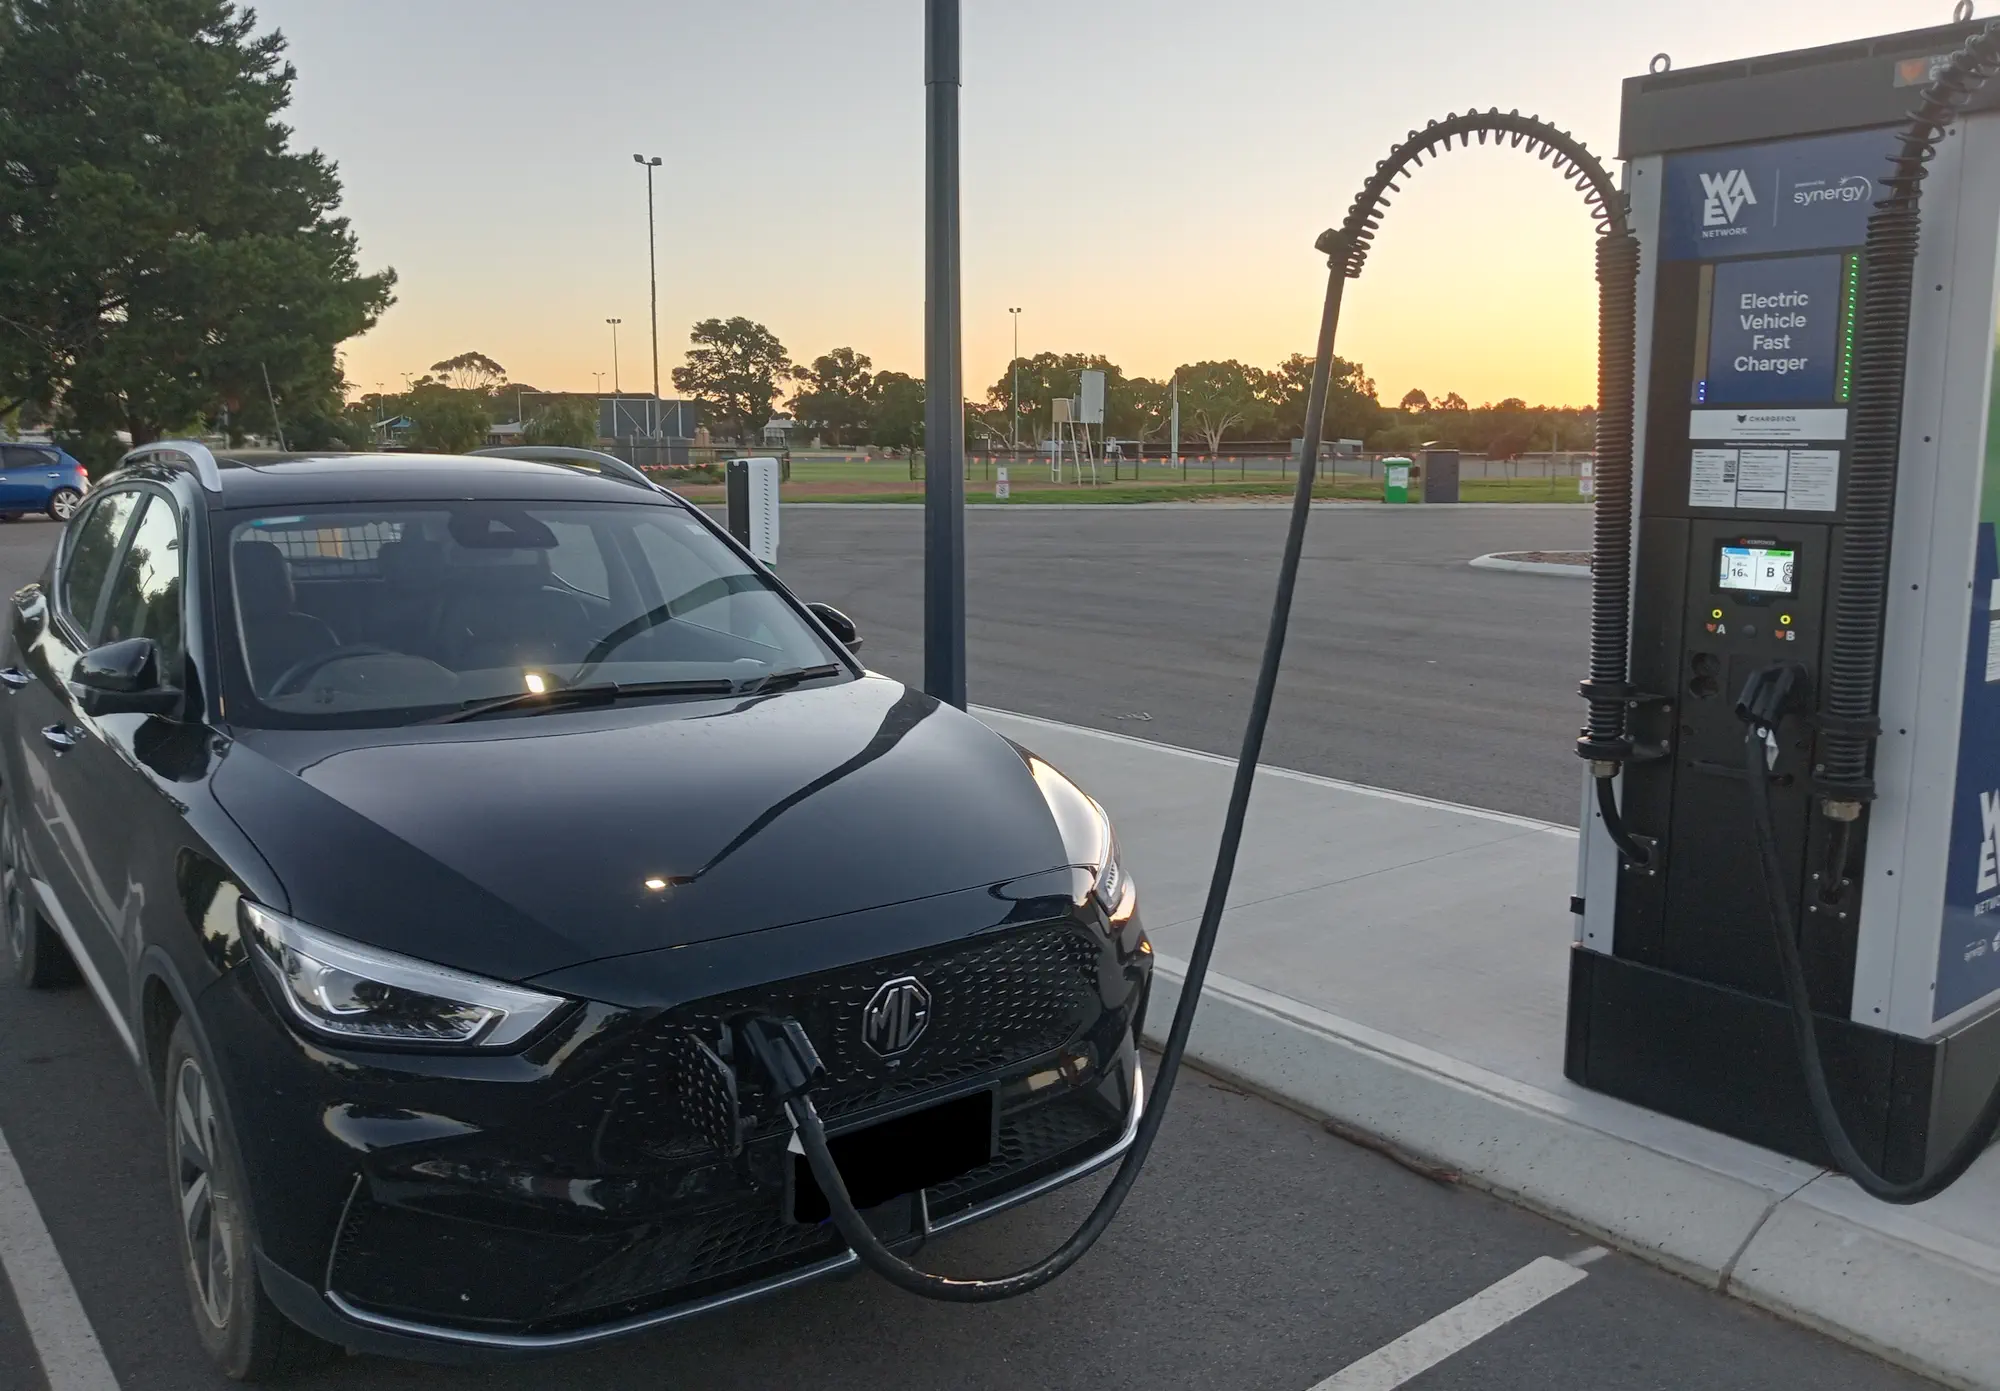 MG ZS EV Essence 2022 Standard Range – Australian electric car owner real world experience